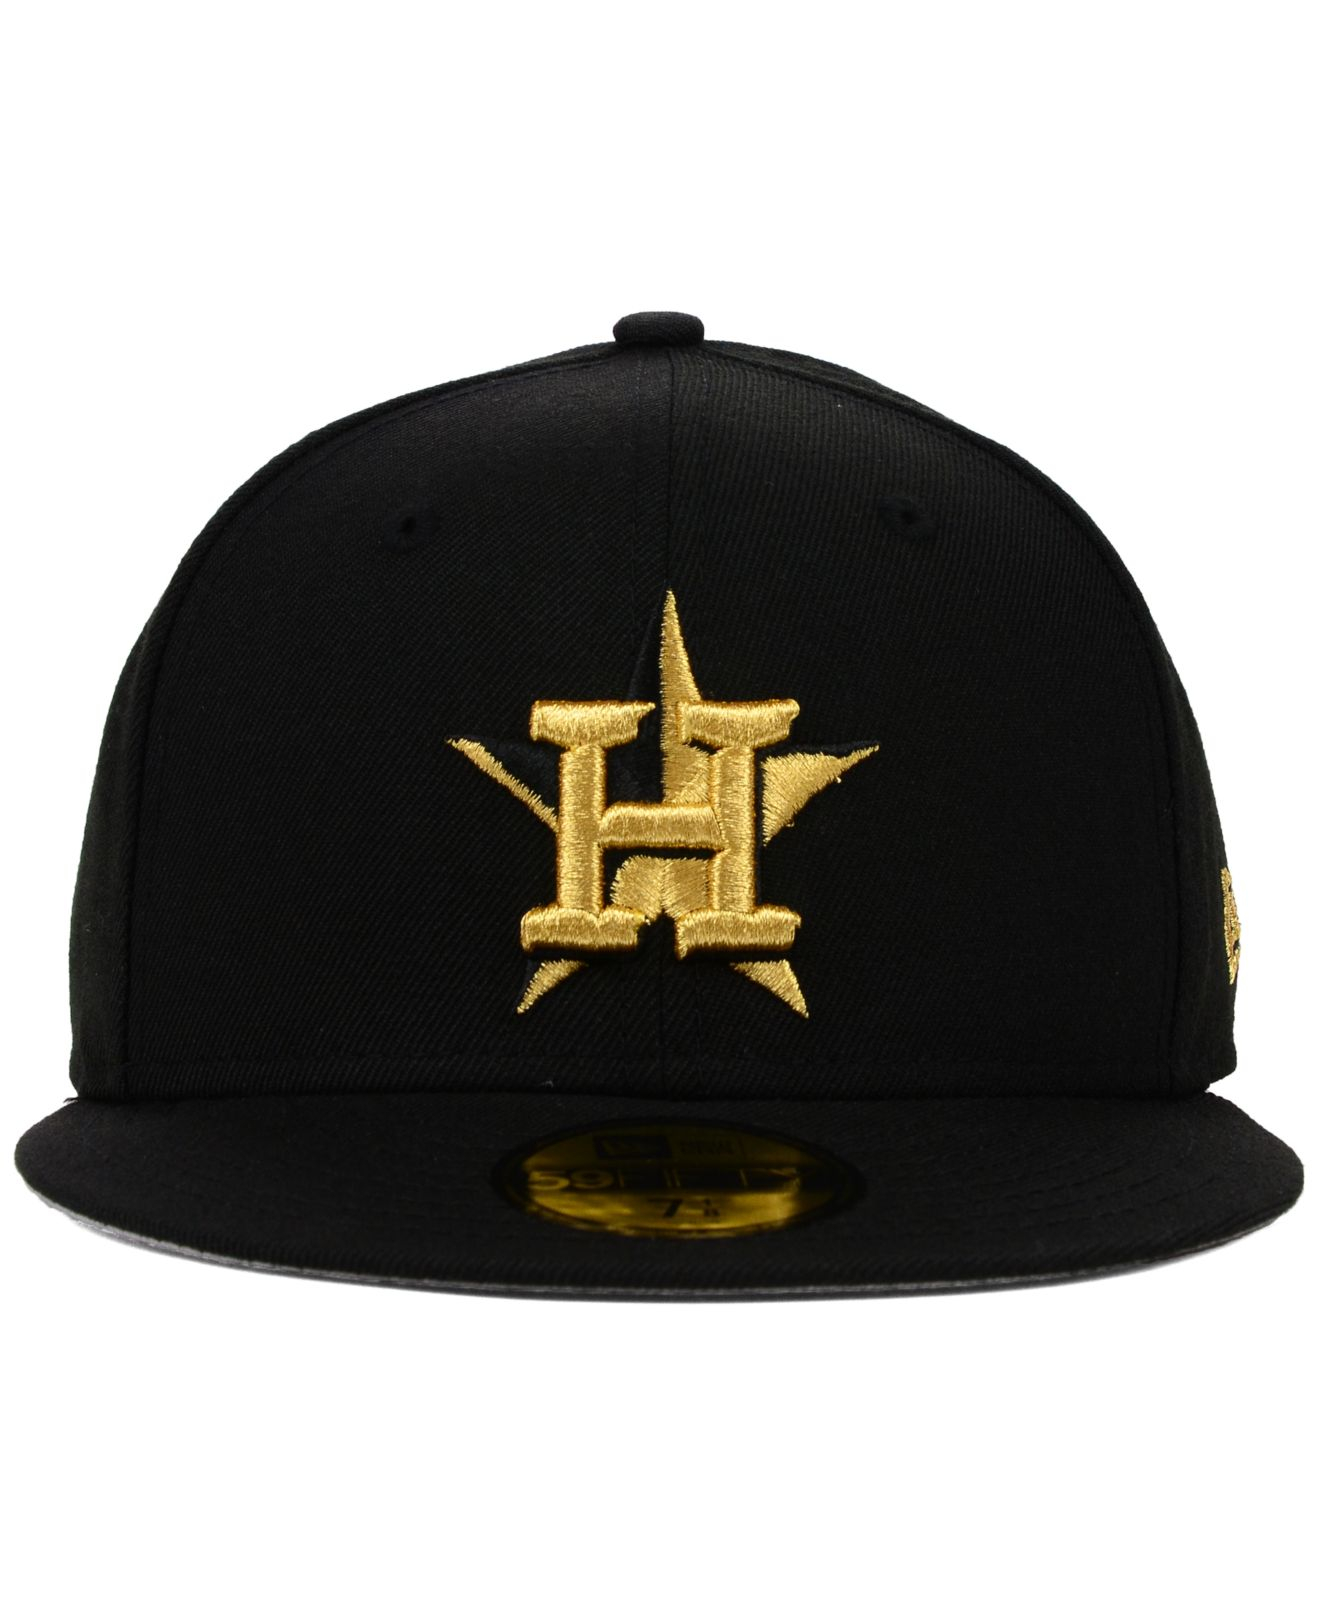 KTZ Houston Astros Gold 59fifty Cap in Black for Men